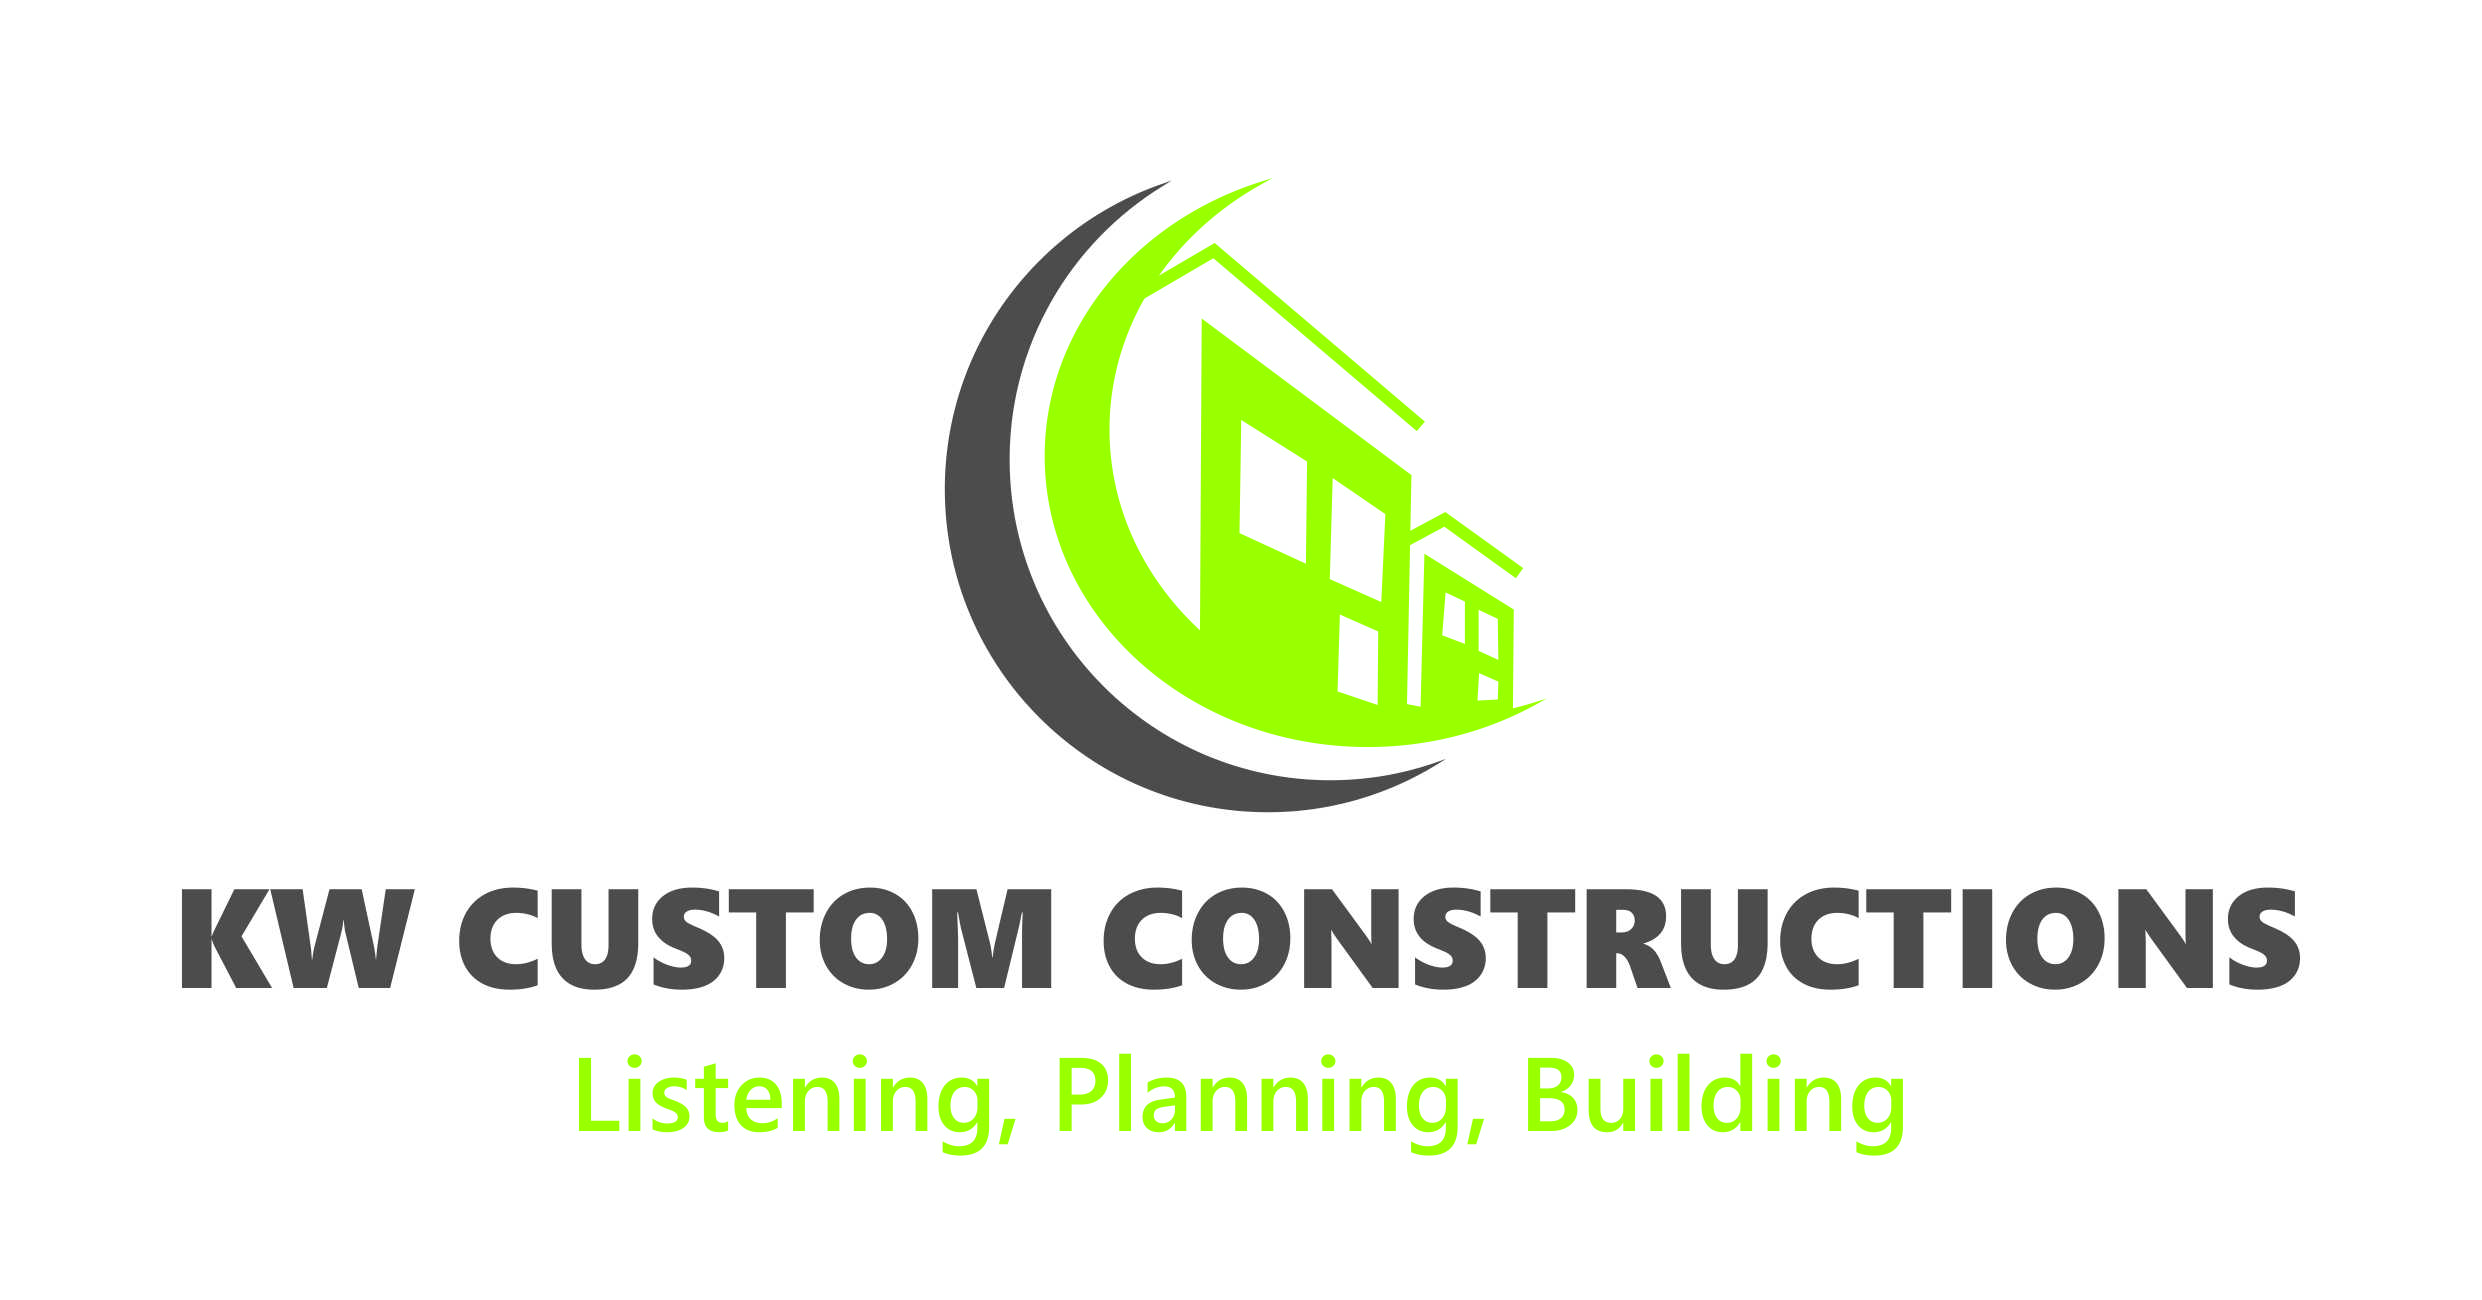 KW Custom Constructions